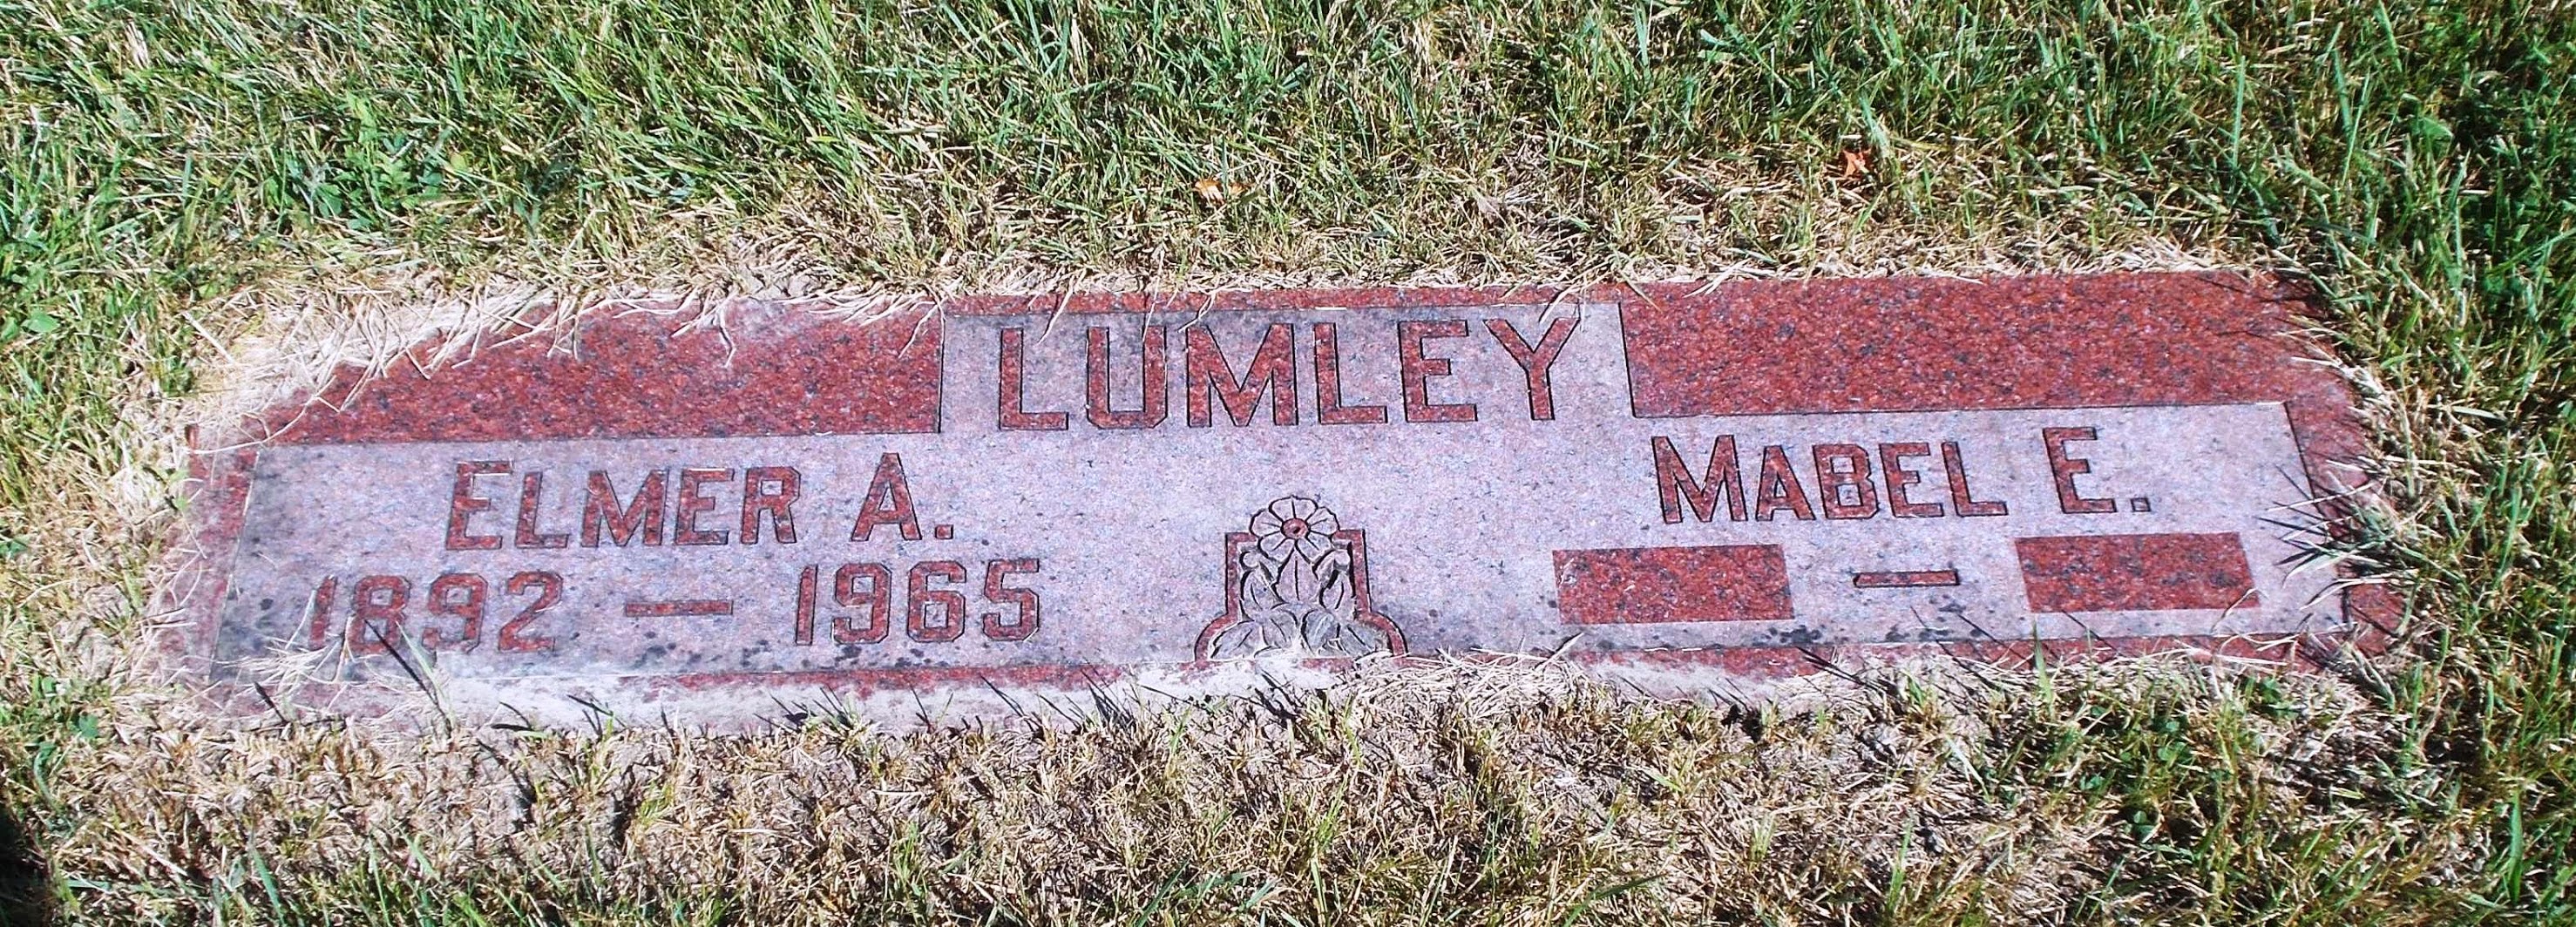 Elmer A Lumley